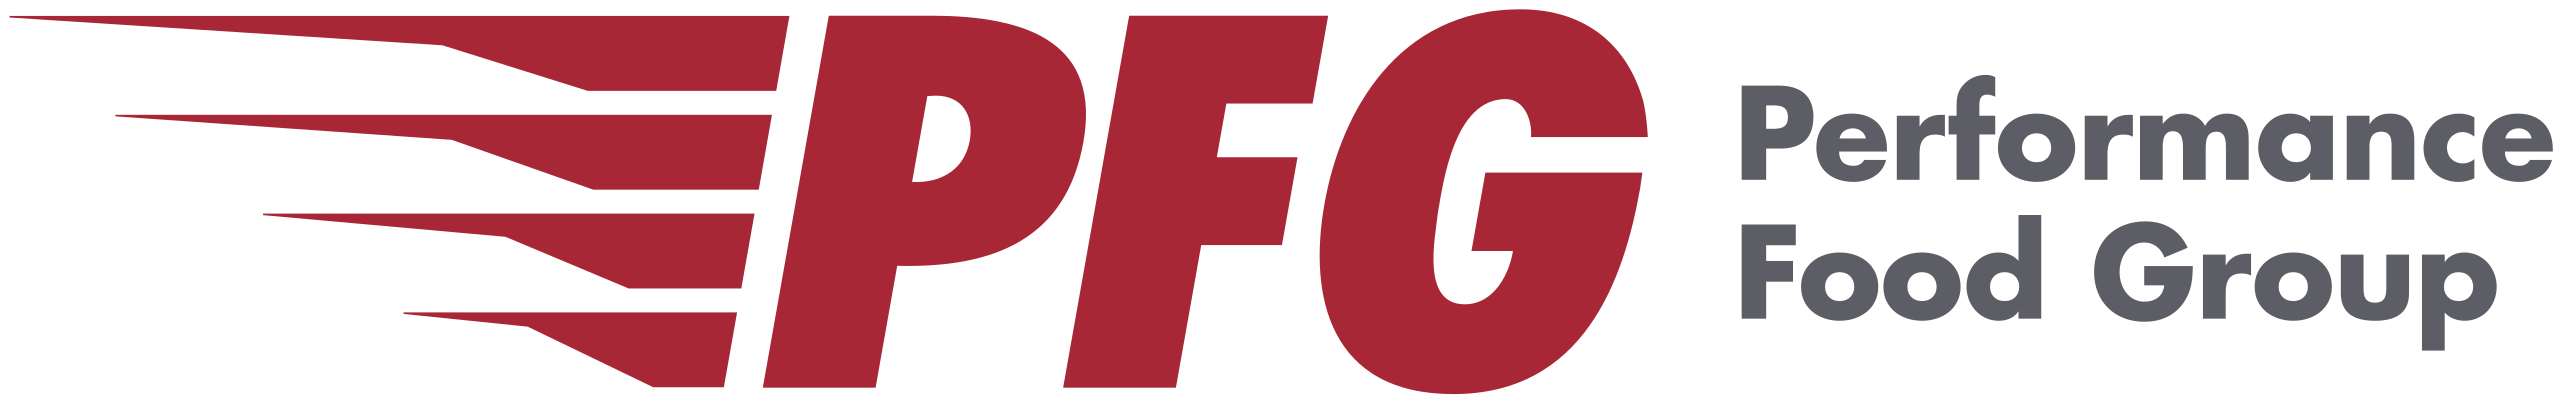 performance-food-group-logo